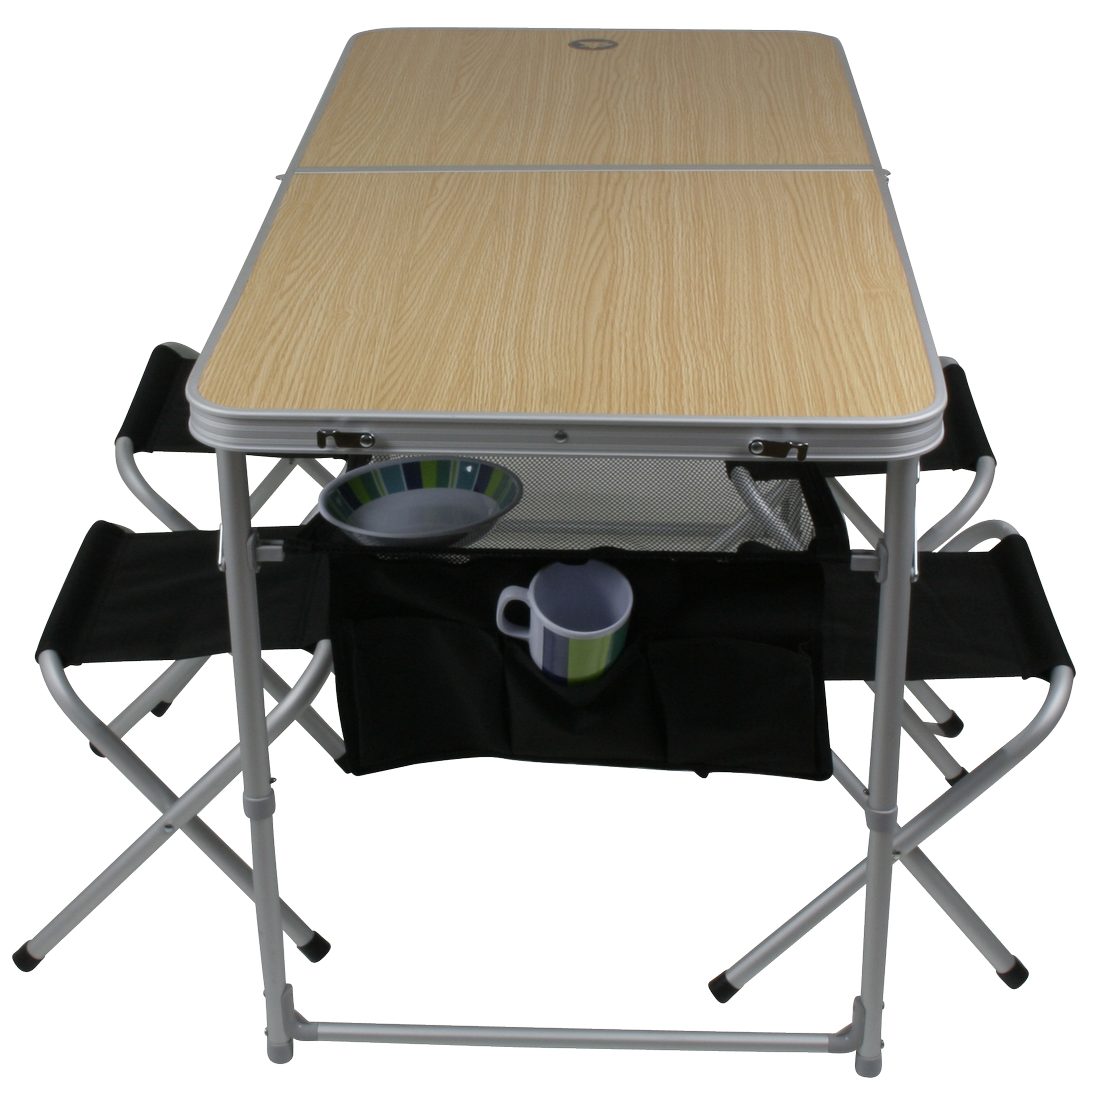 Tisch-Hocker-Set 10T Netz-Ablagefäche 4 Koffer Family 64x64x9cm 10T - Mobiles Personen Aluminium + Portable im Campingtisch